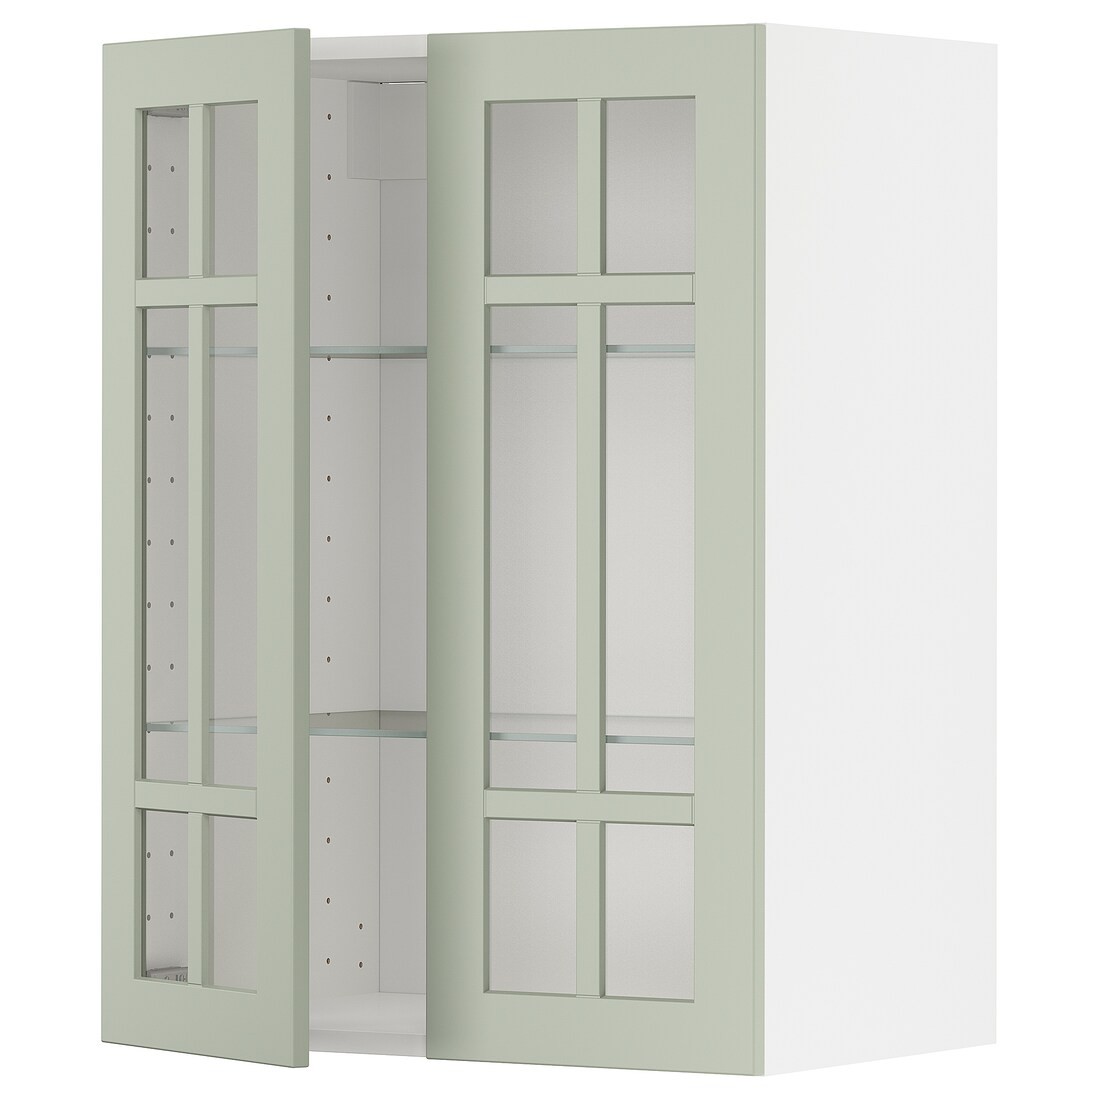 METOD МЕТОД Навесной шкаф, белый / Stensund светло-зеленый, 60x80 см